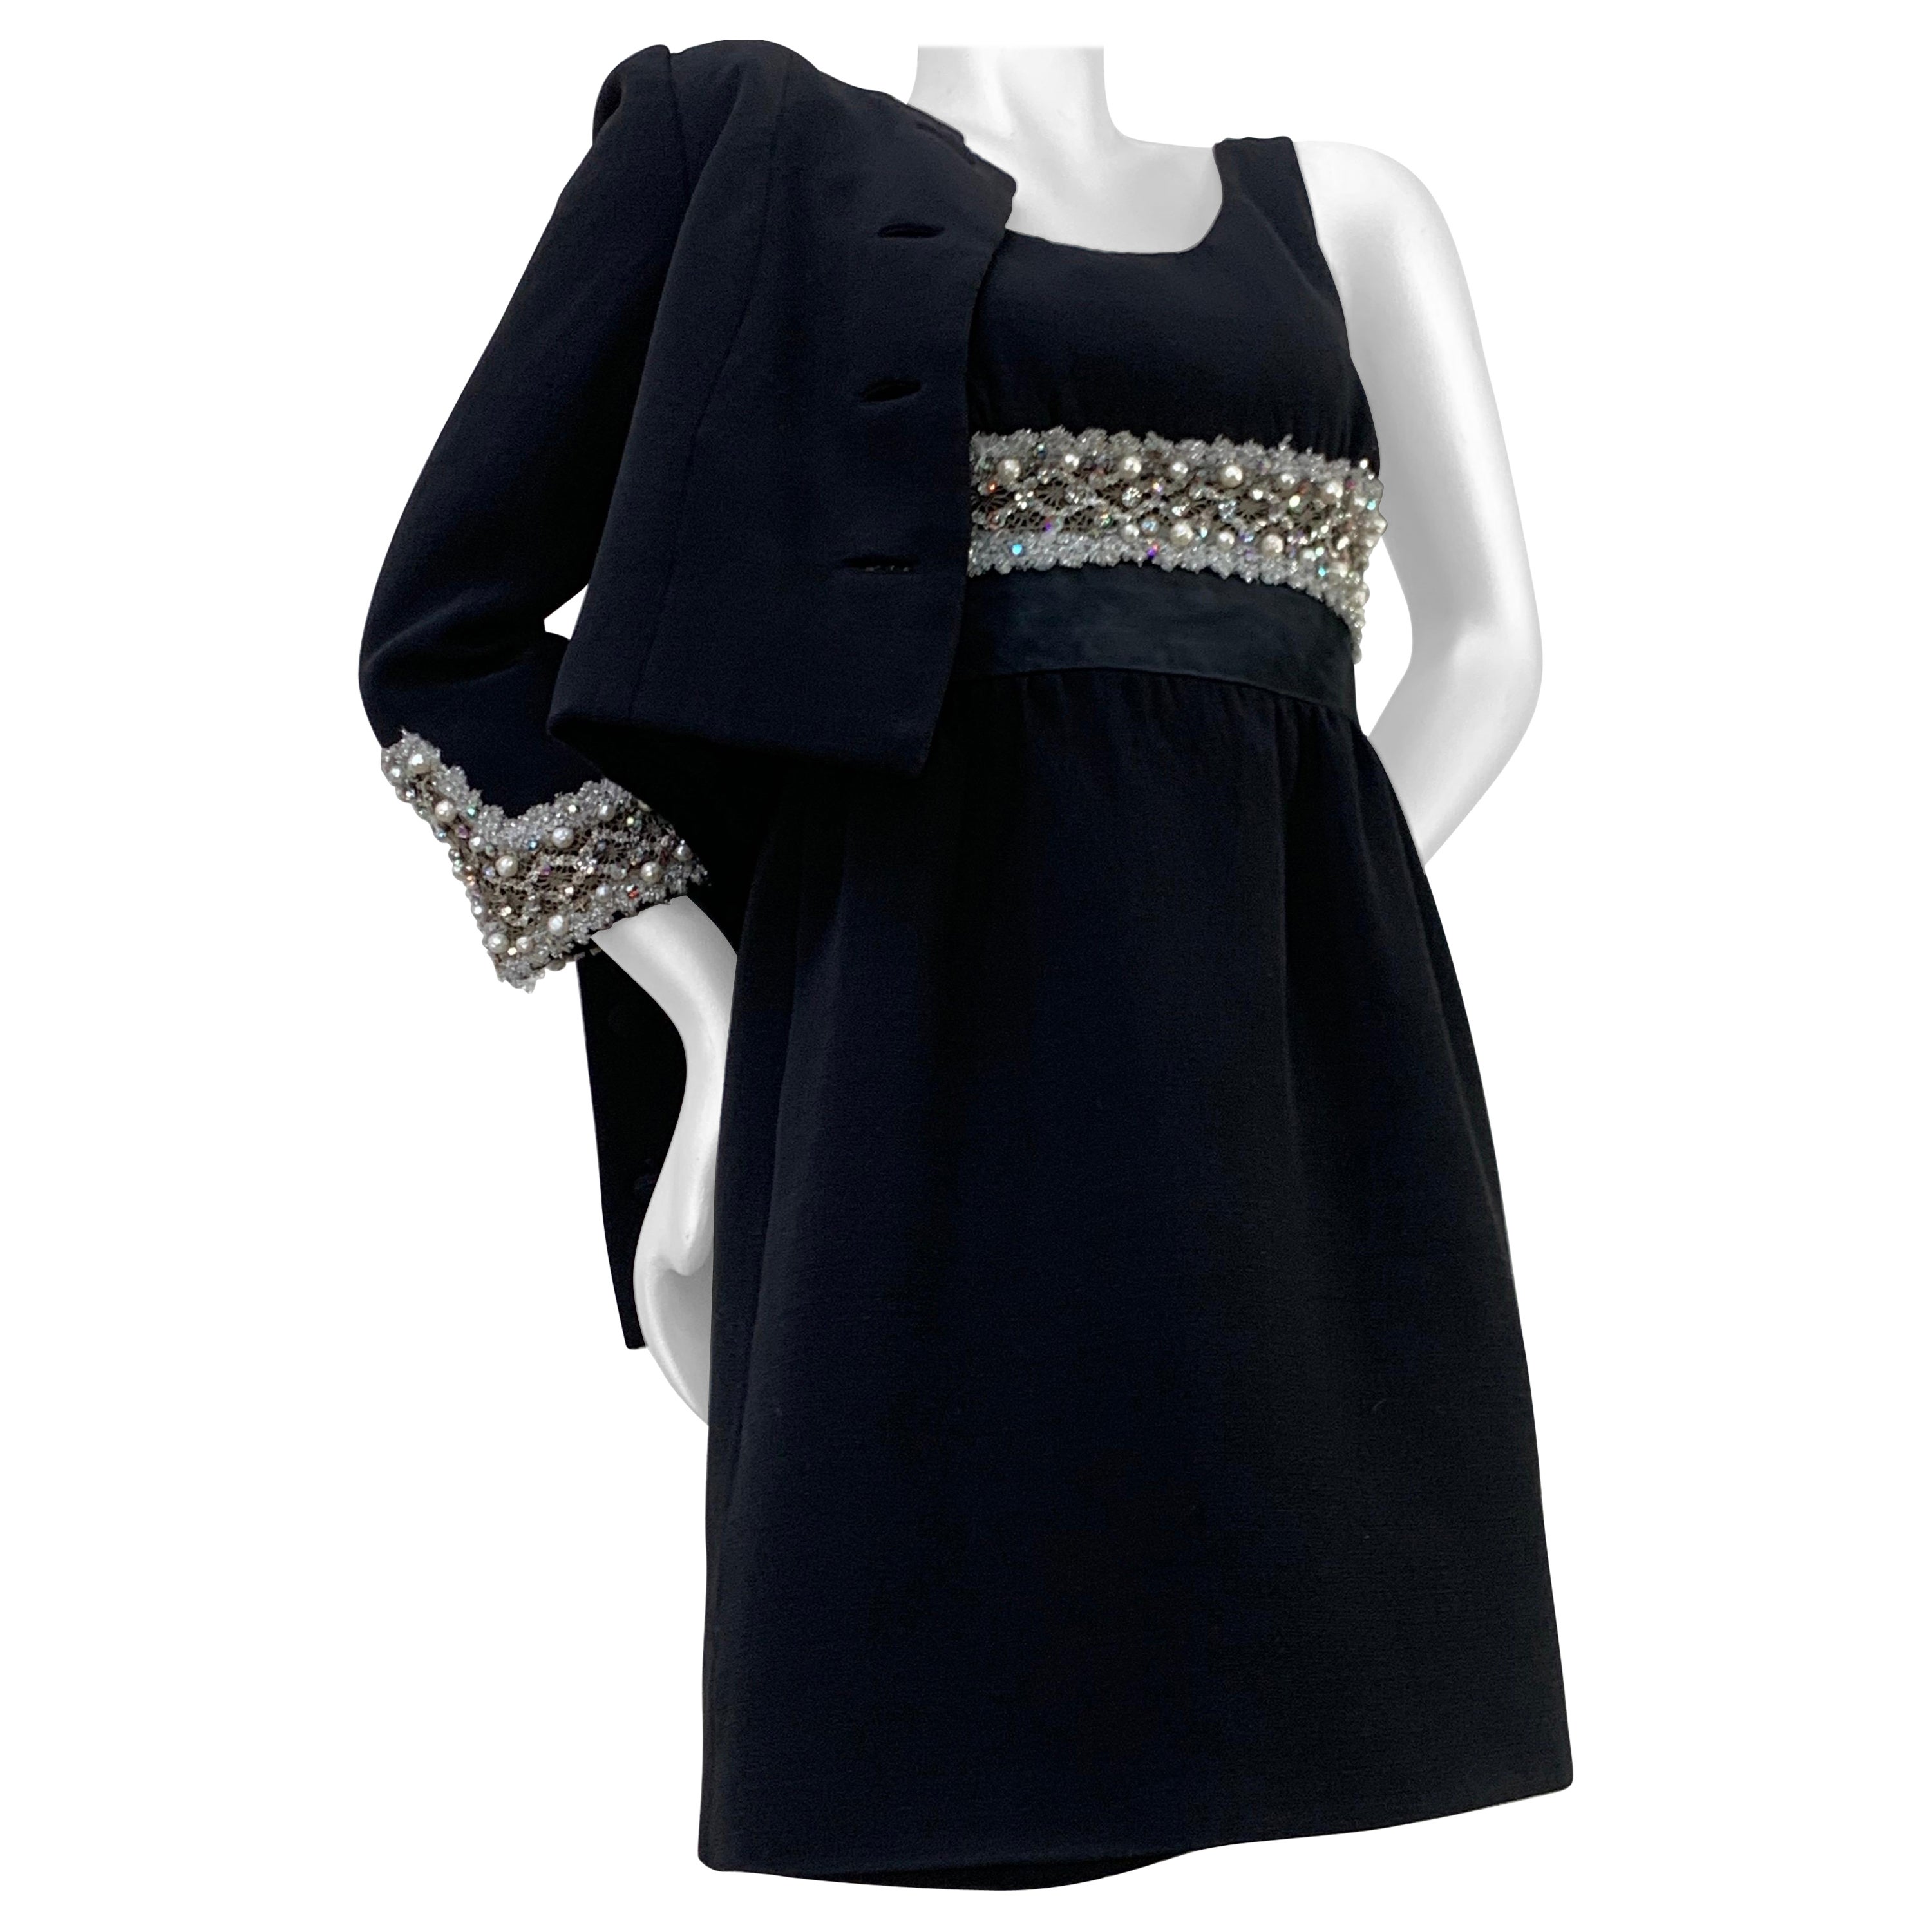 Sophie-Saks Fifth Avenue - Robe babydoll noire et veste boléro en dentelle, style mod, 1960 en vente